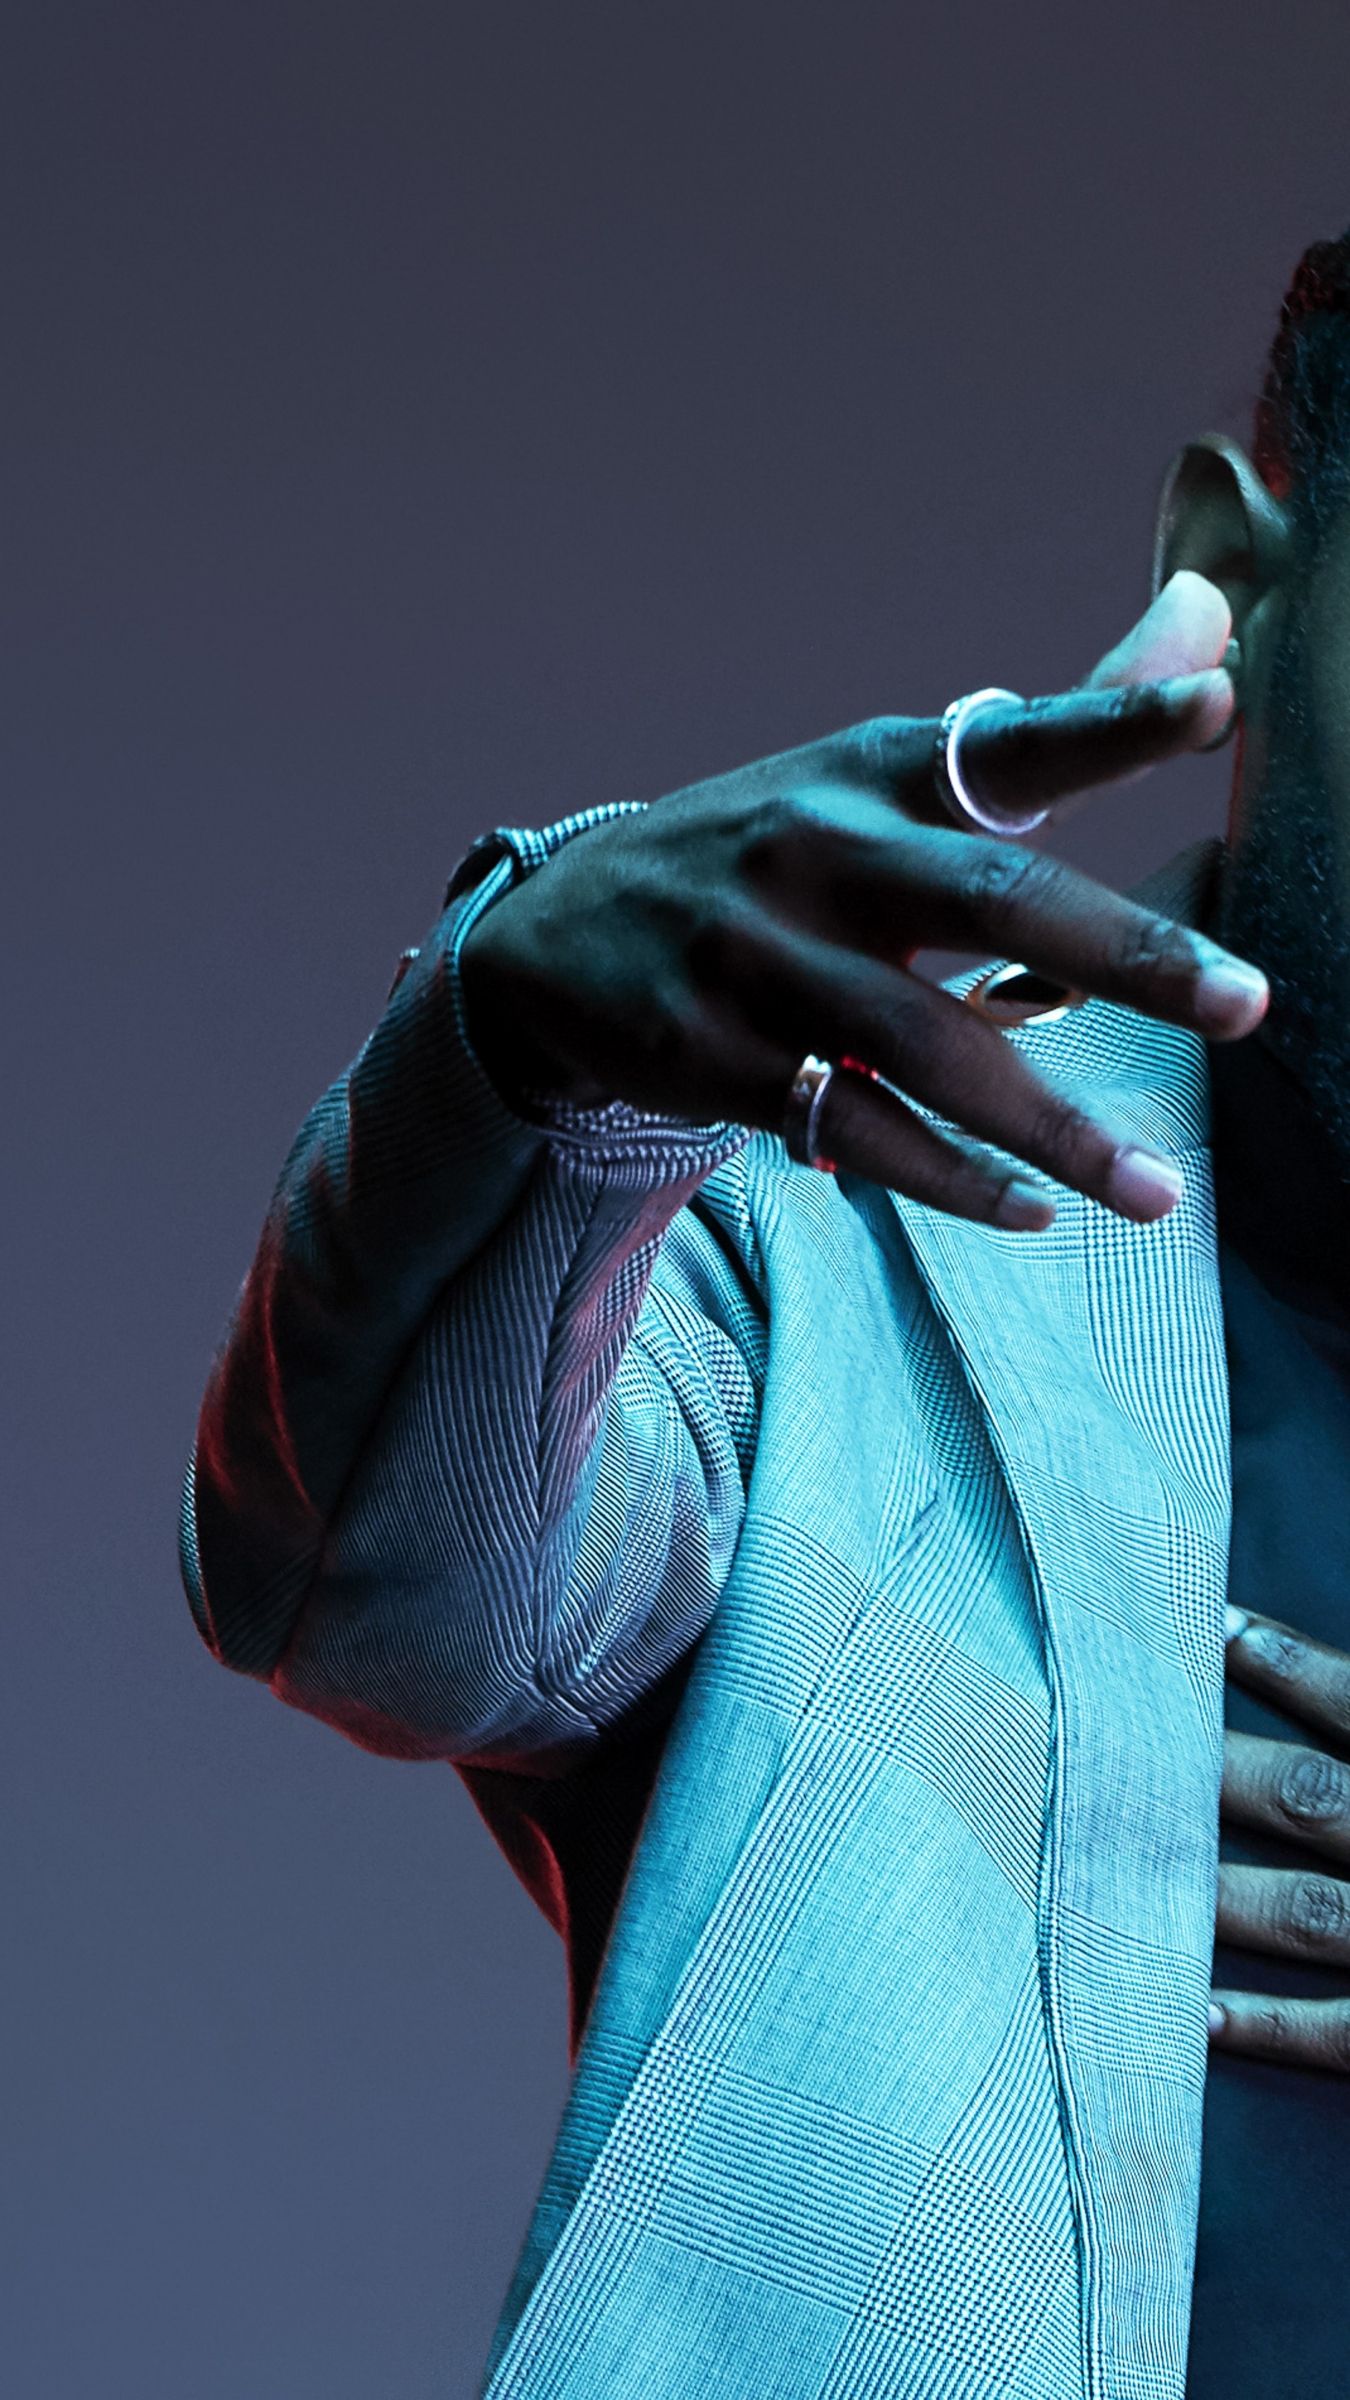 Kendrick Lamars good kid mAAd city has 22 pure sales record